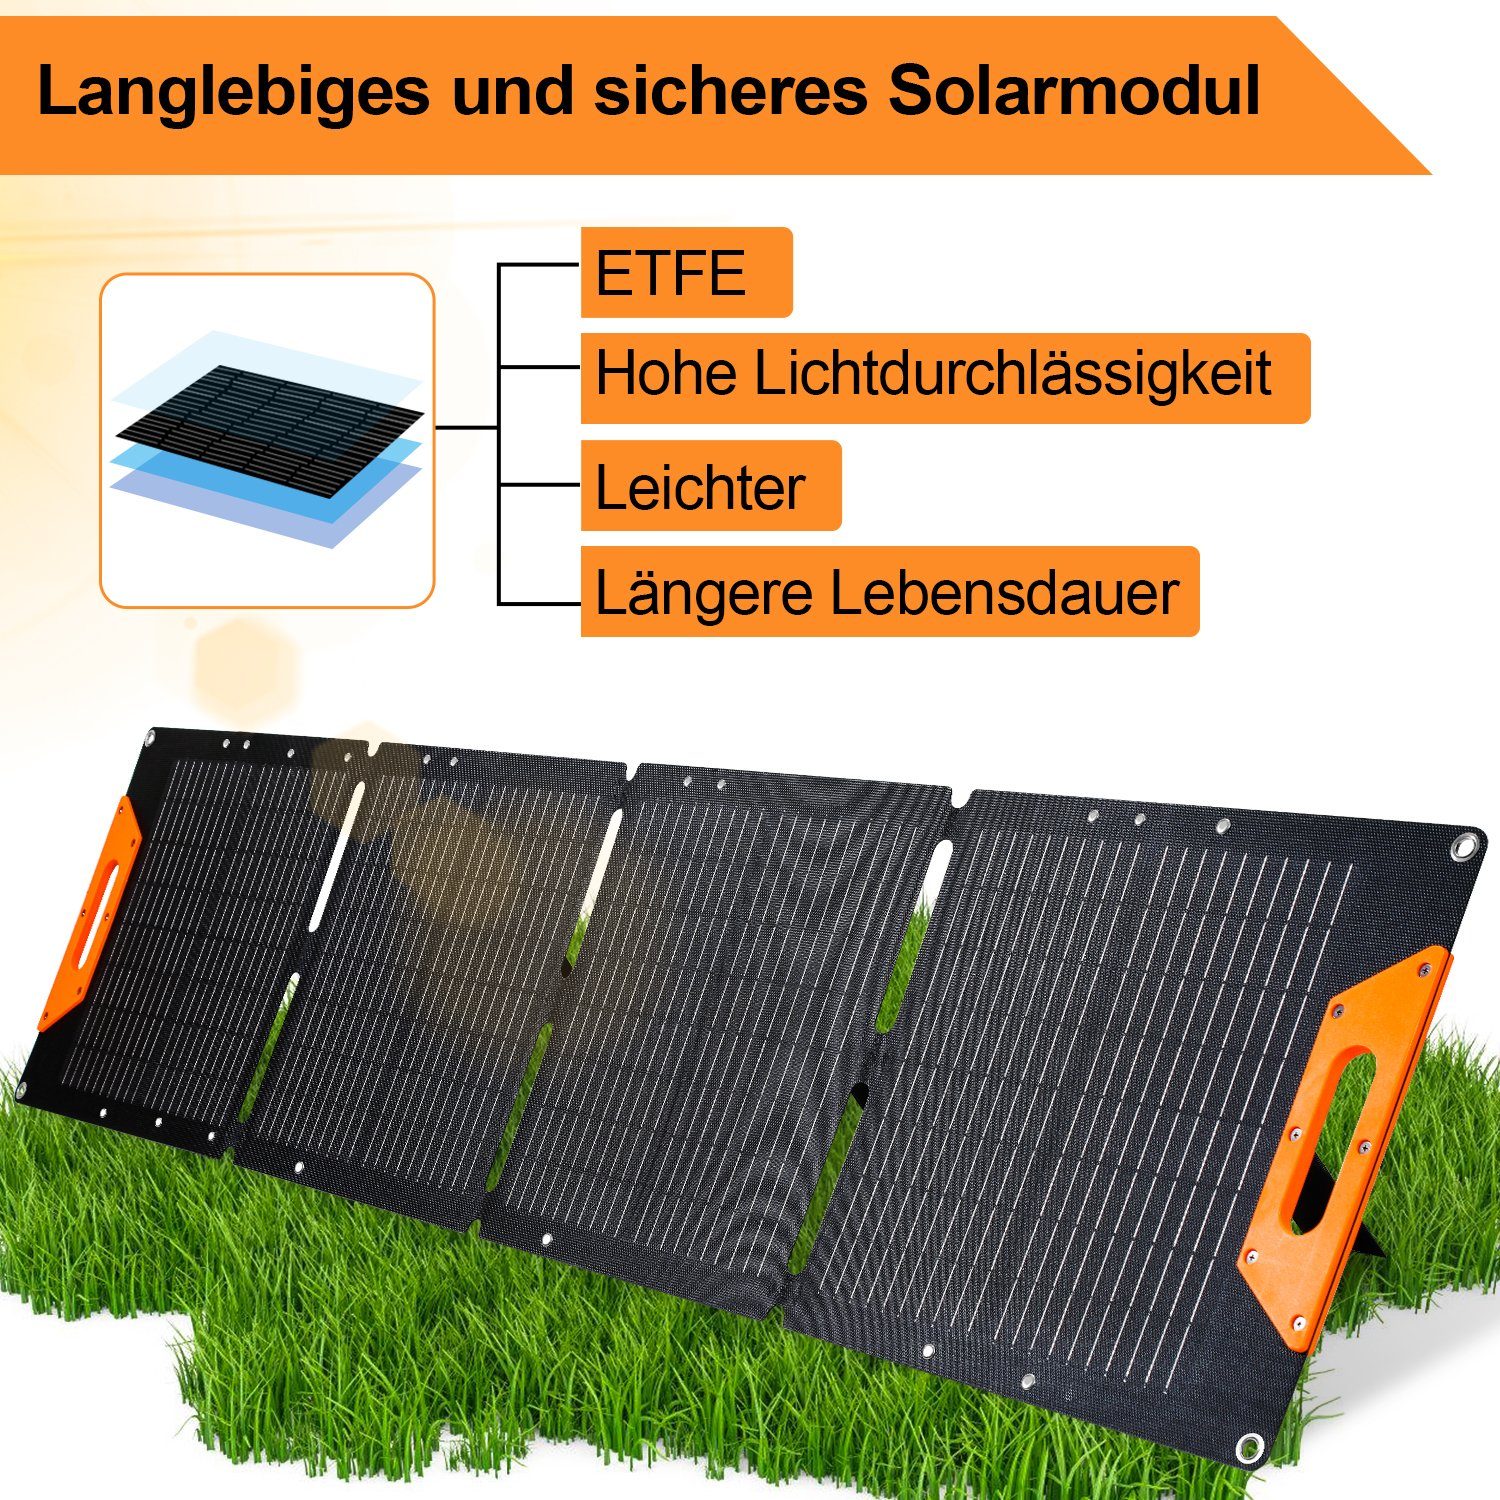 Solarpanel W Faltbar Powerstation Solarmodul Gimisgu 120,00 Powerbank Solarladegerät, für 120W